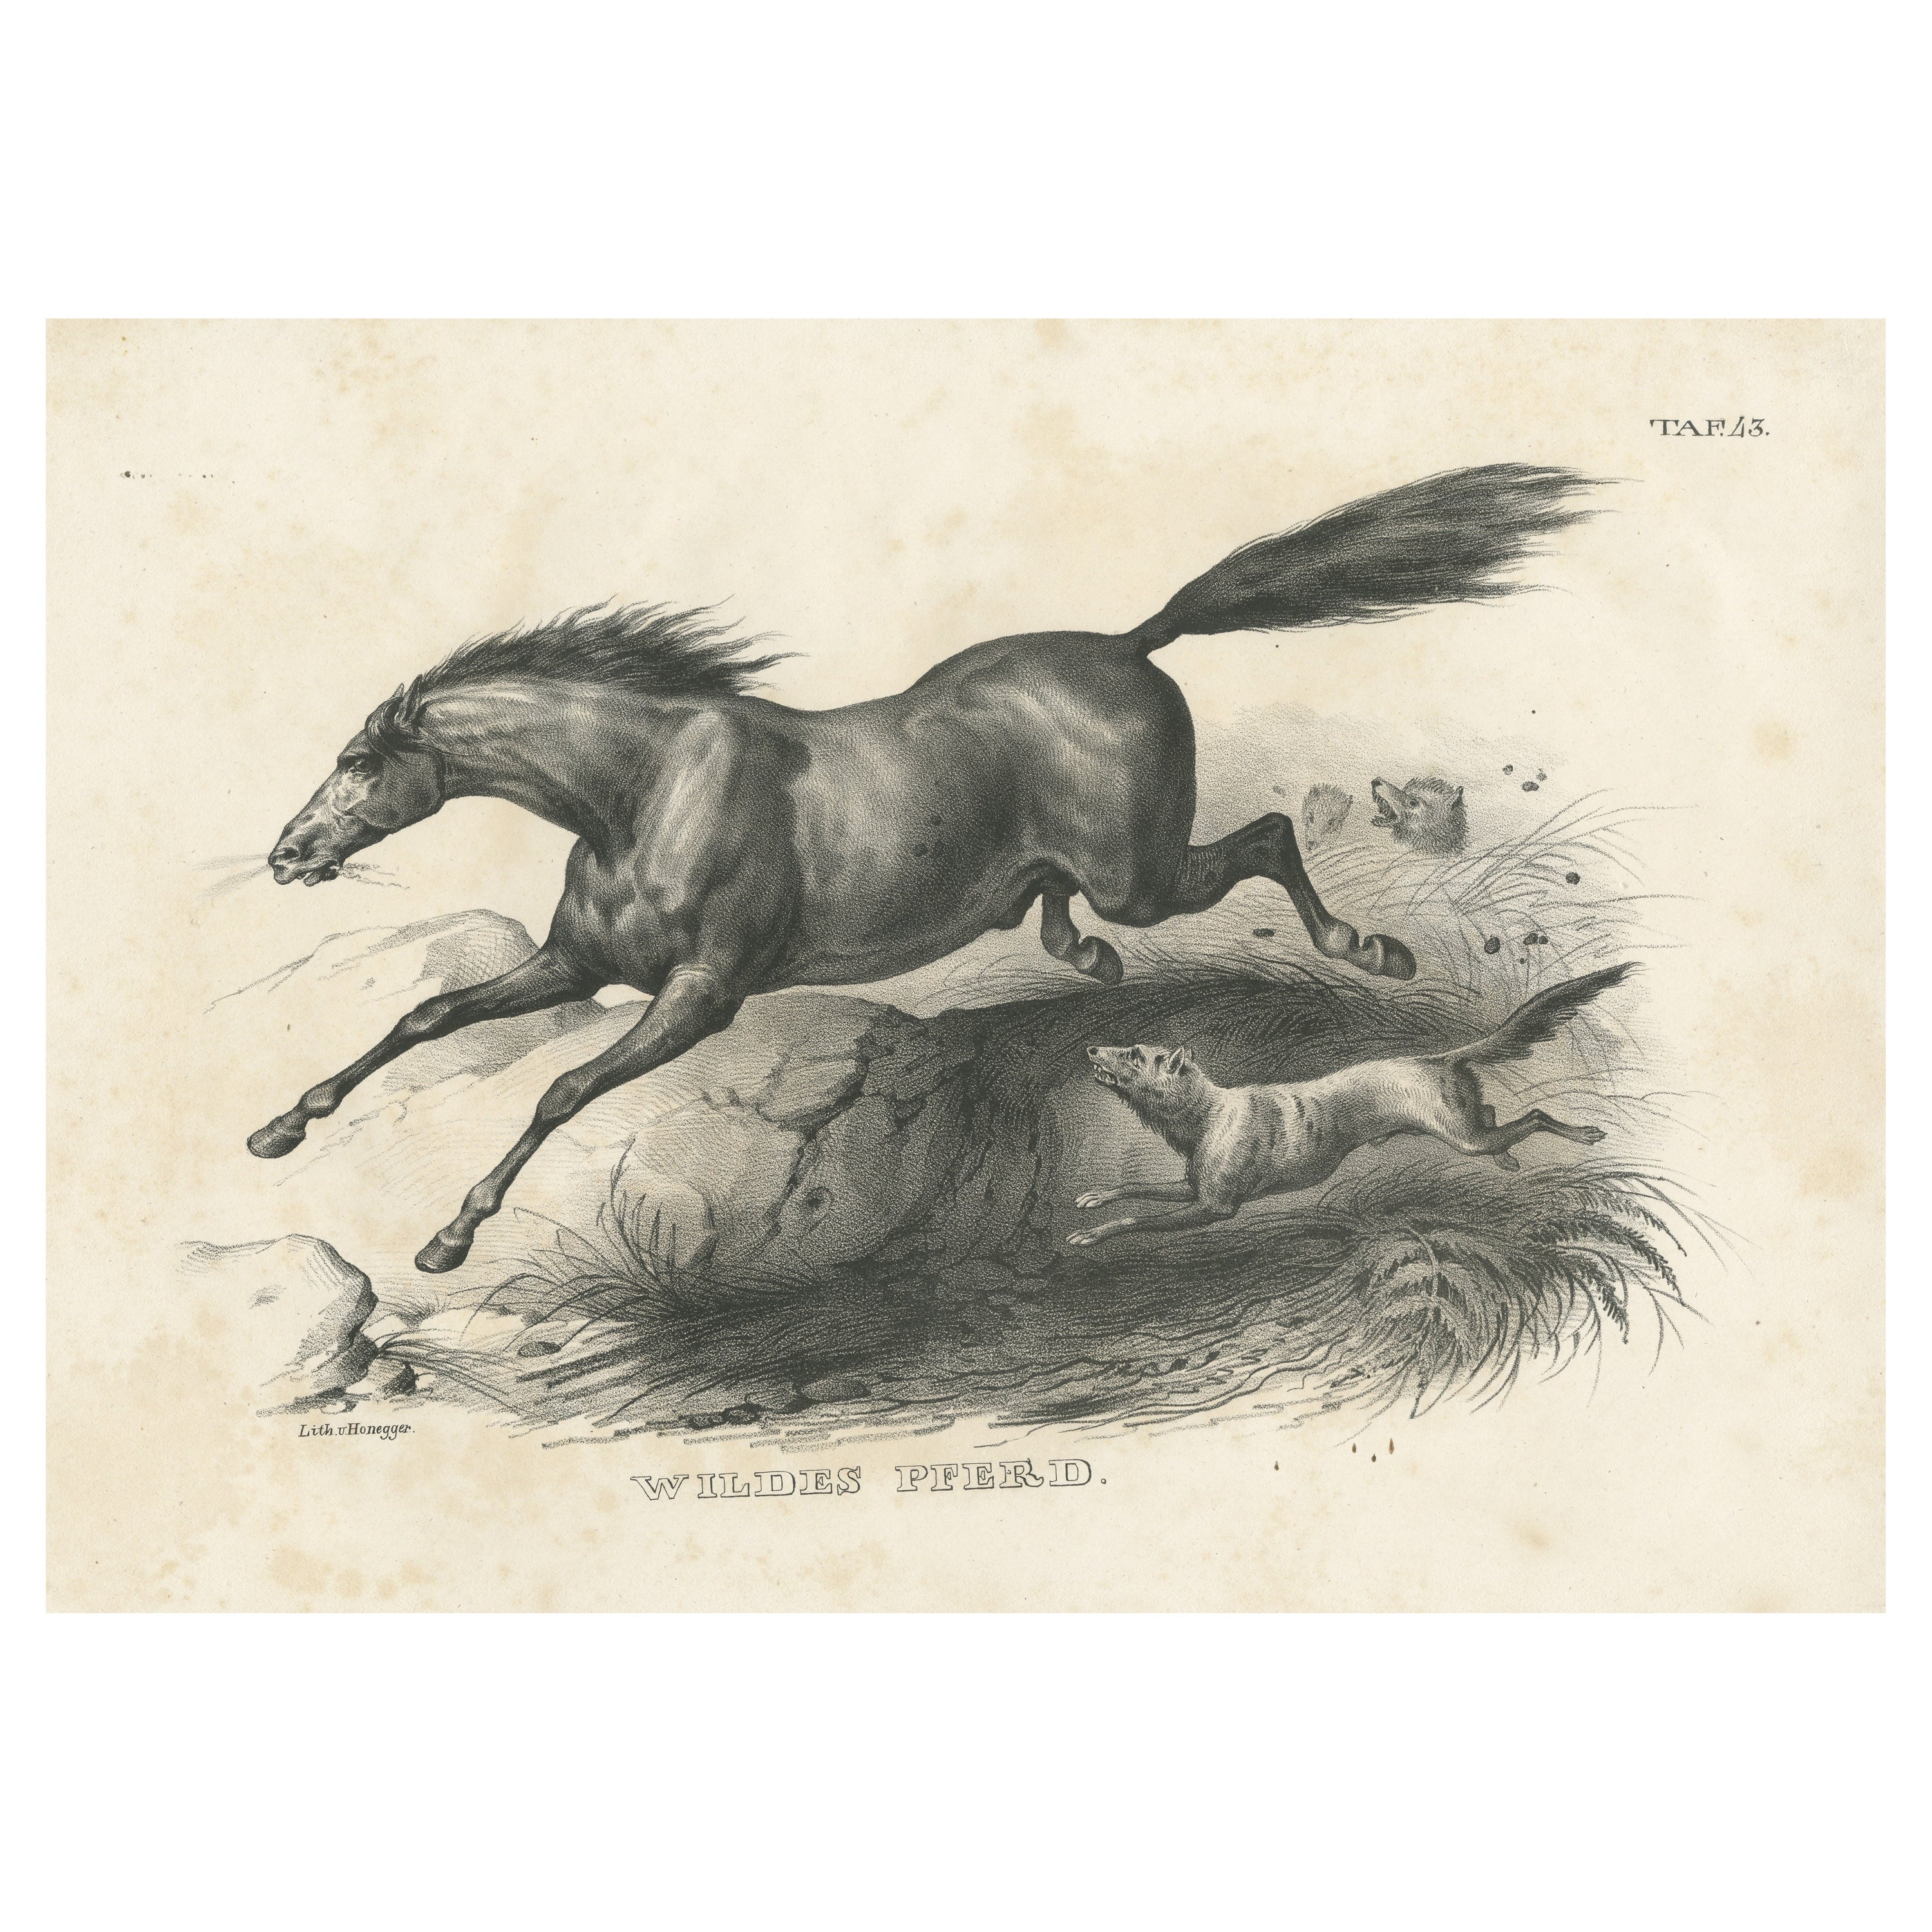 Original Antique Print of a Wild Horse For Sale